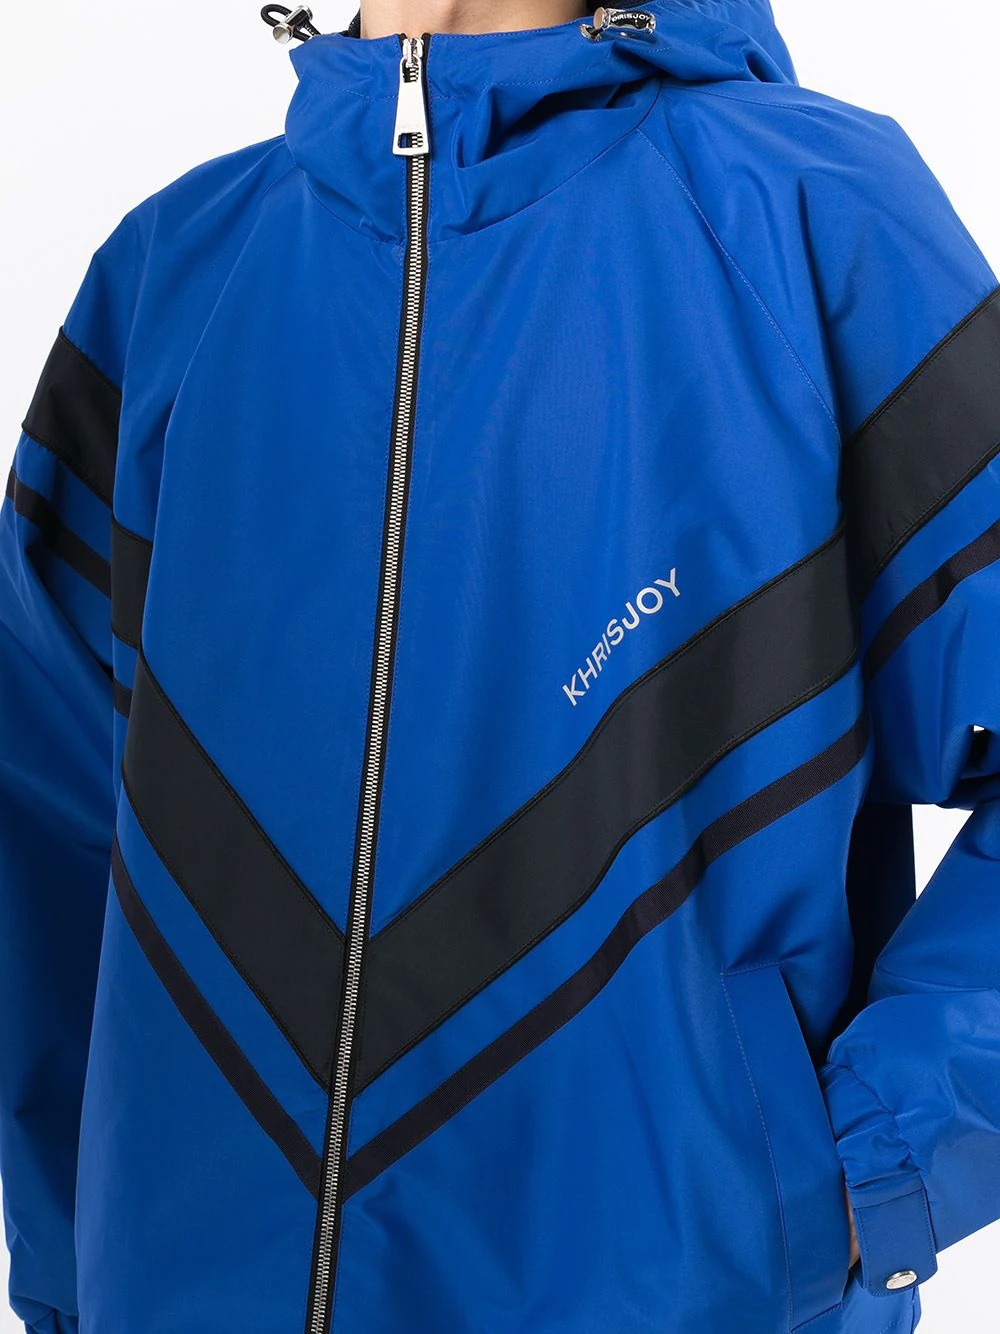 zig-zag lightweight jacket - 5